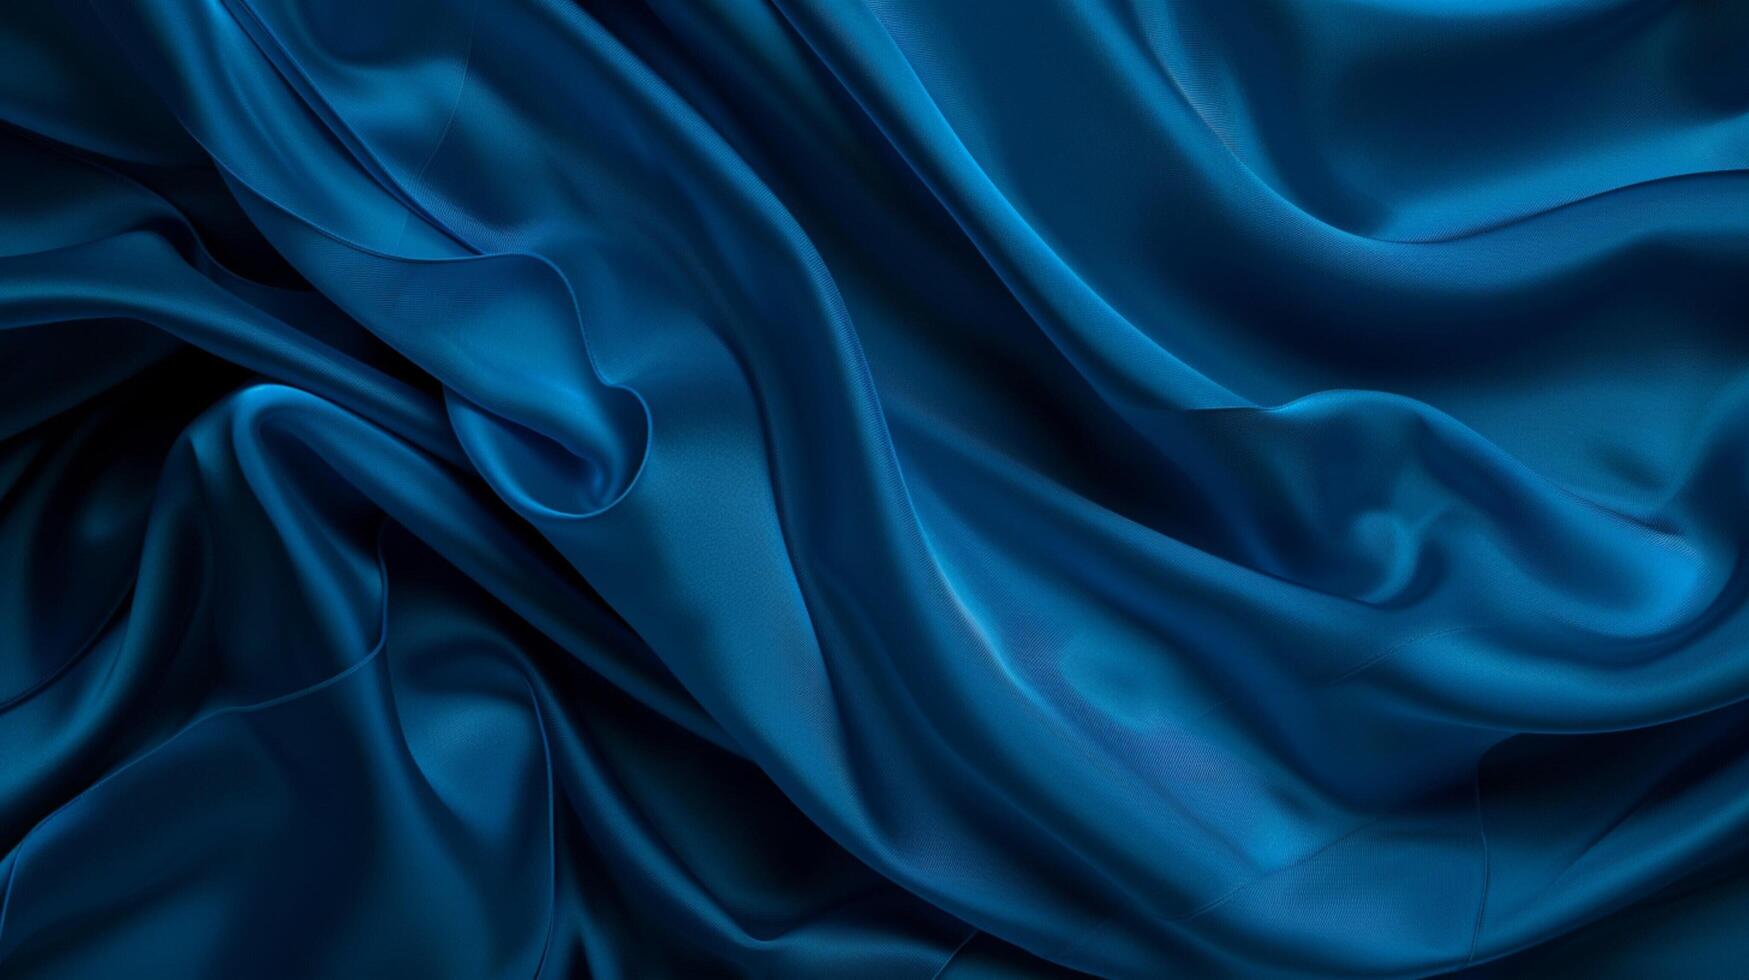 abstrakt lyx lutning blå bakgrund foto